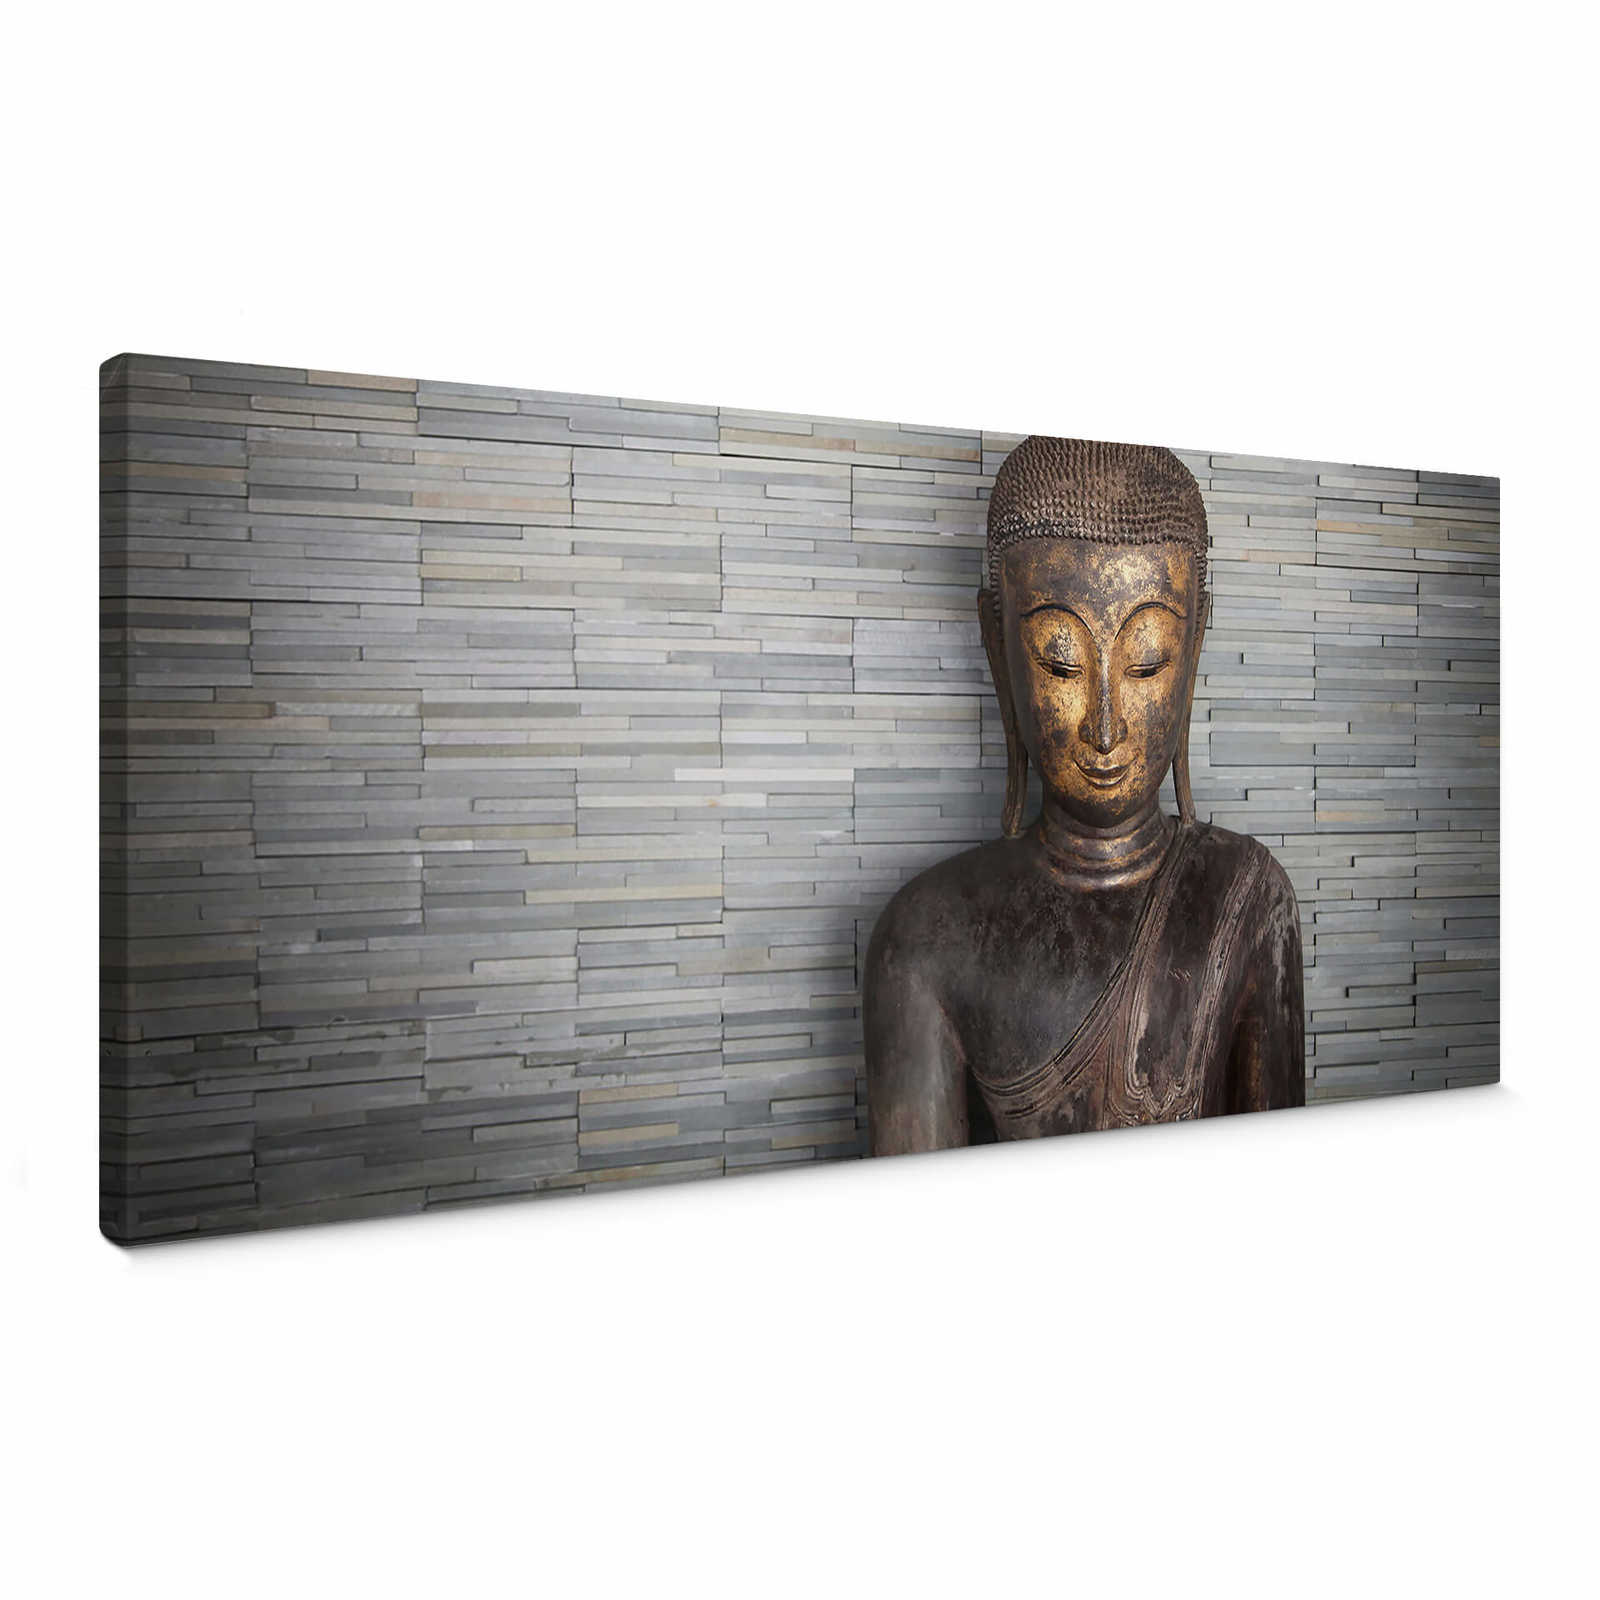         Canvas print Buddha figure, meditation and spirituality
    